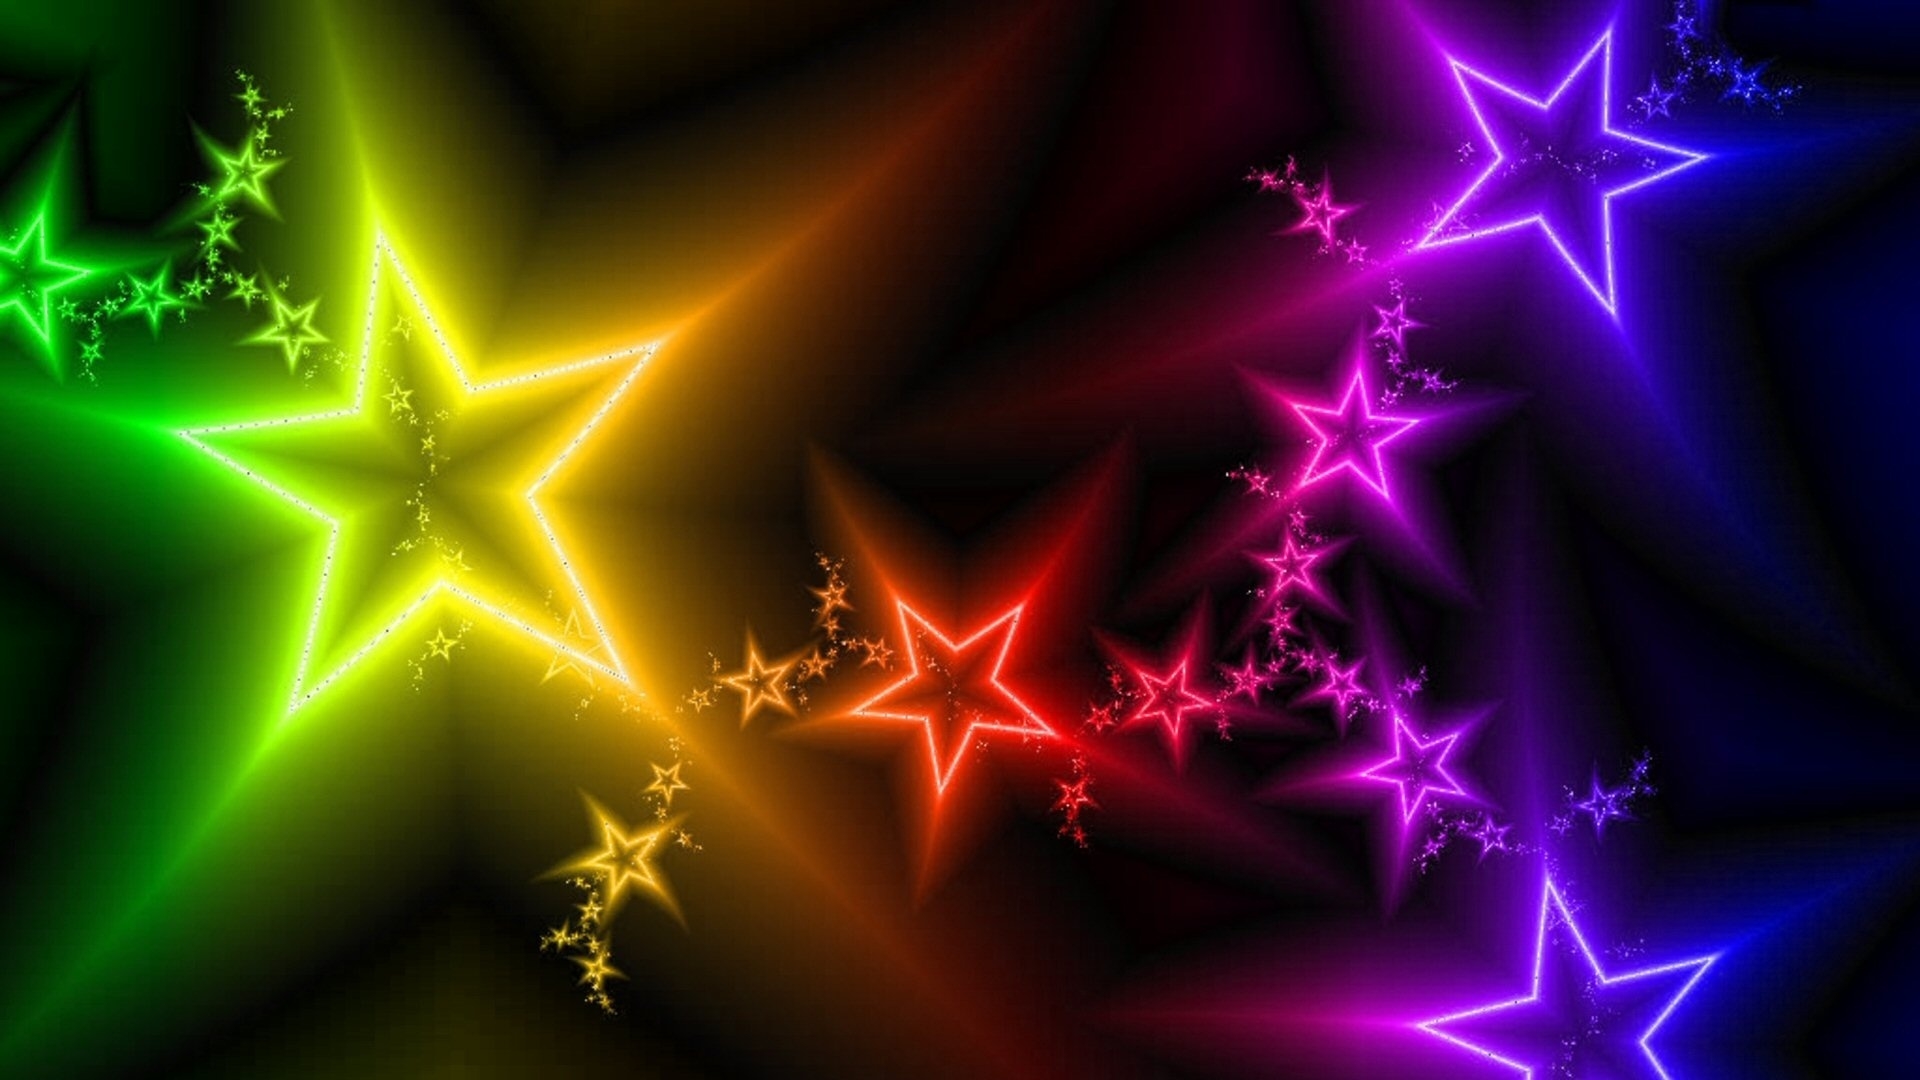  wallpaper Colorful Stars Wallpapers hd wallpaper background desktop